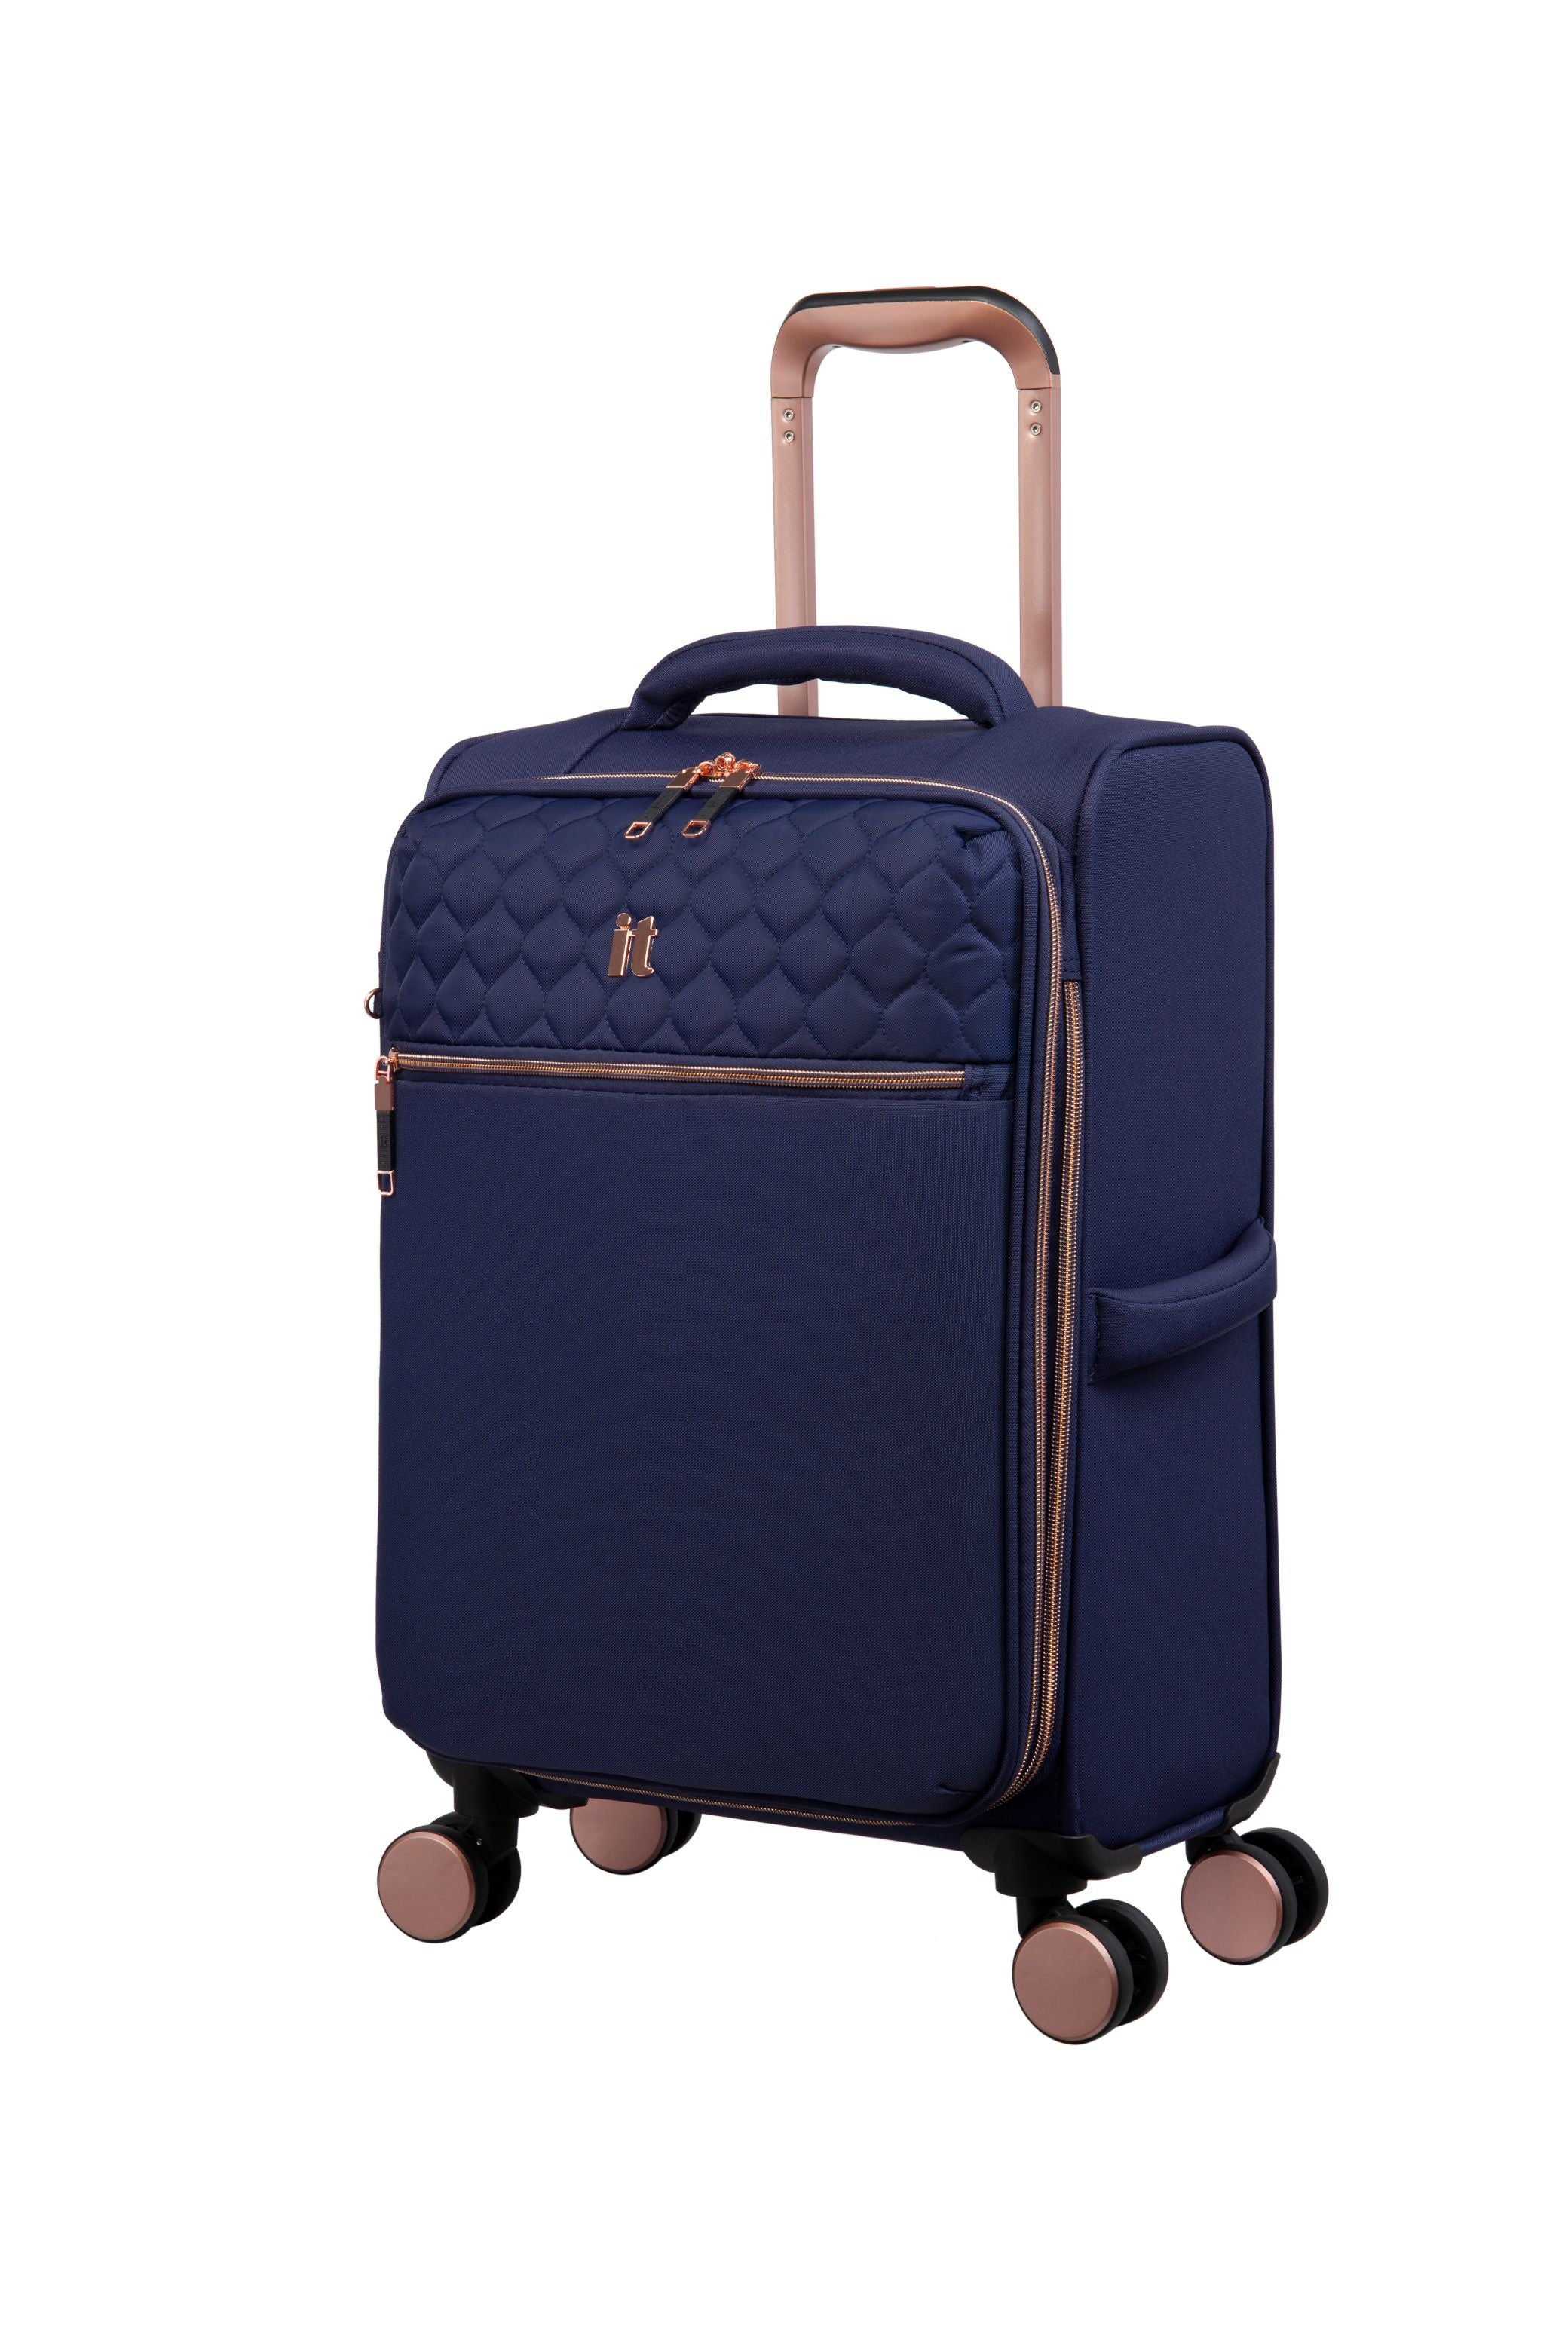 It Luggage Suitcase Lux-lite Divinity Eva - Royal Blue - Large  | TJ Hughes